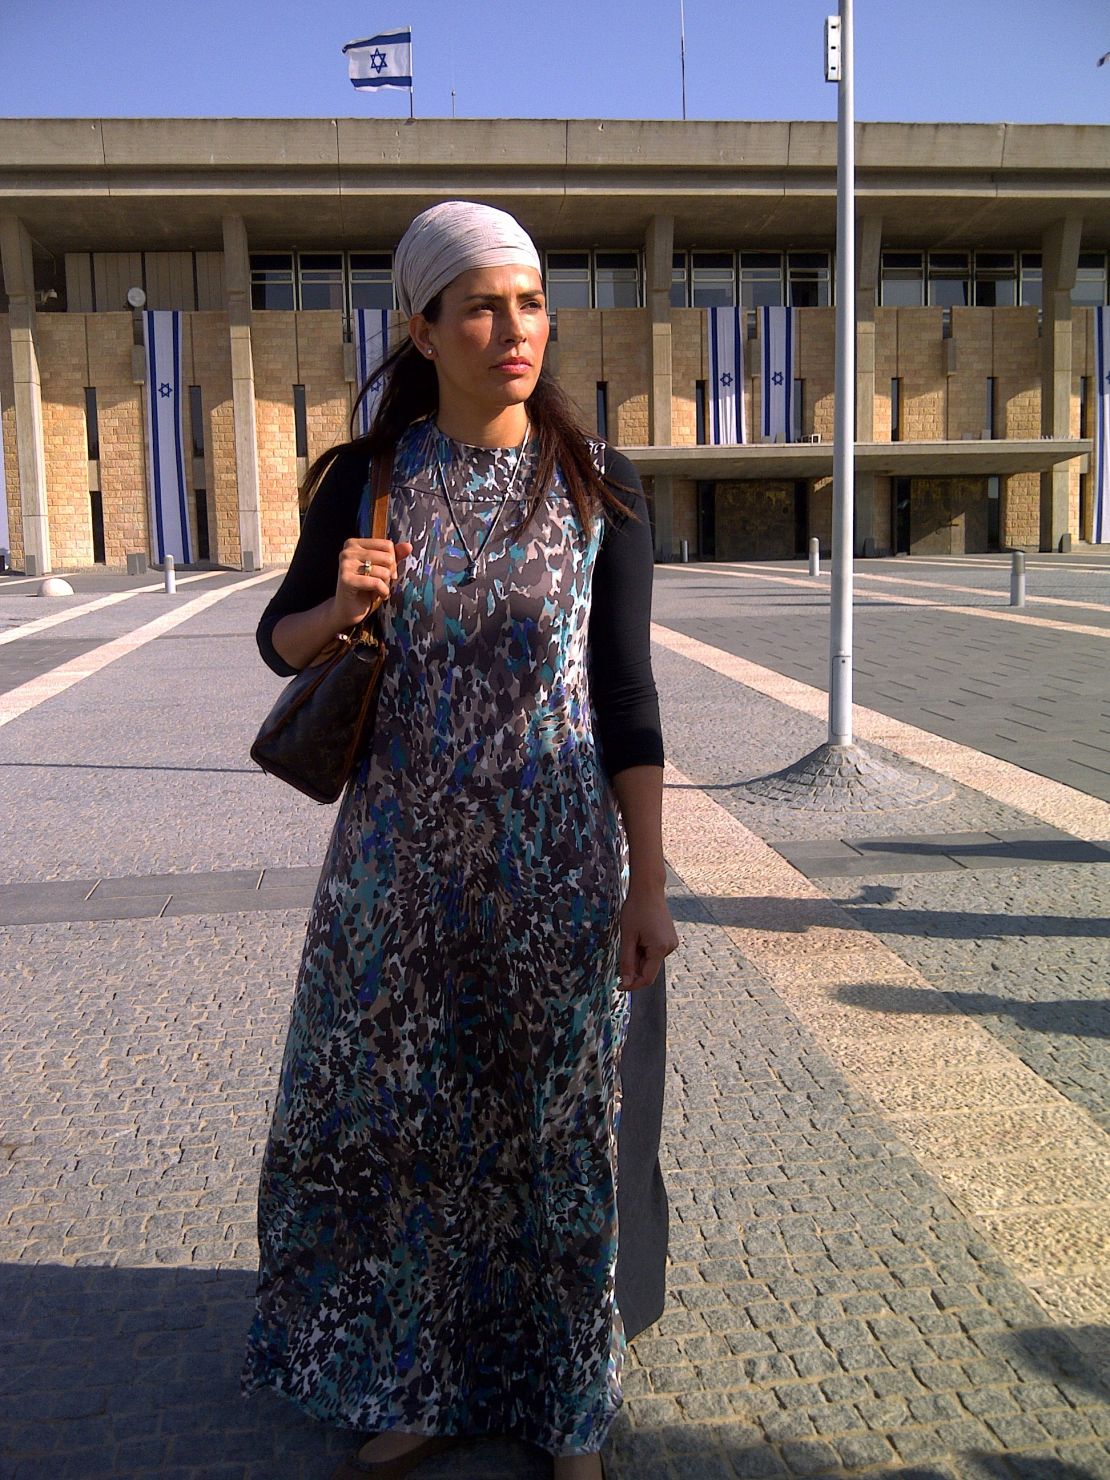 Former Miss Israel Linor Abargil outside the Israeli Parliament in Jerusalem.